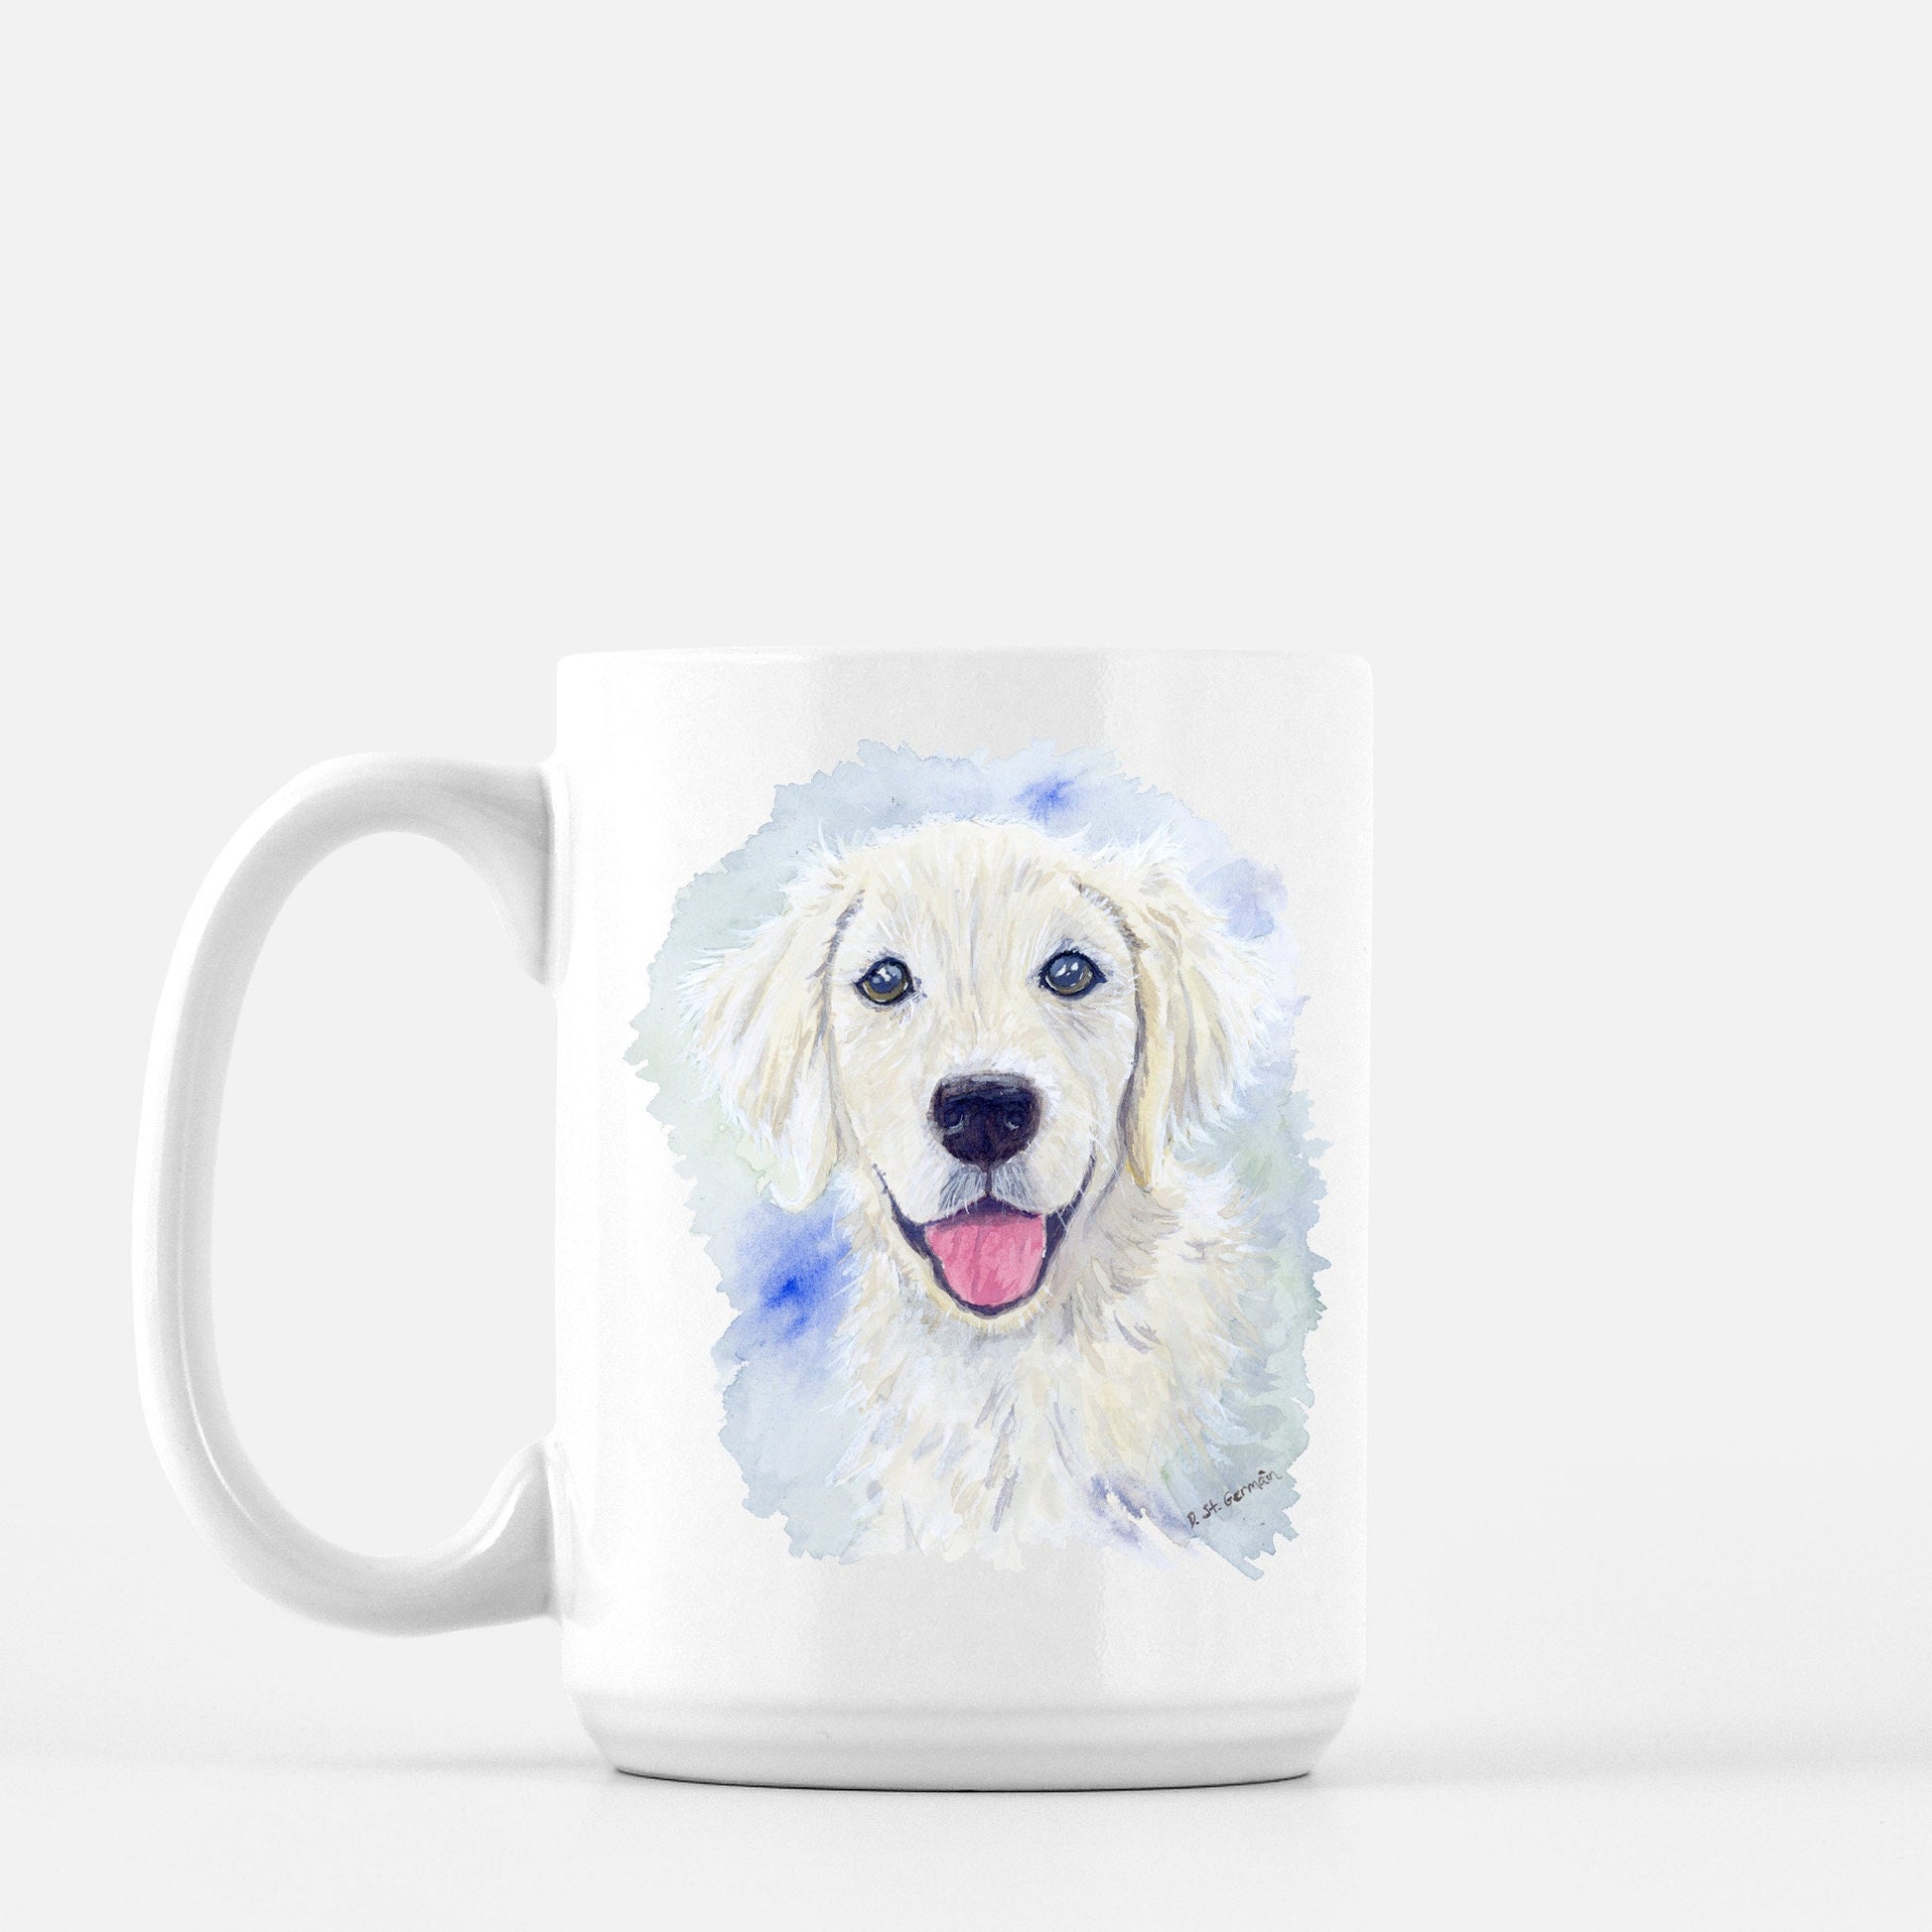 Golden Retriever Mug, Dog Coffee Cup, Golden Retriever Gift, Dog Christmas Present, Dog Mug, Dog Lover Gift, Watercolor Dog, English Cream